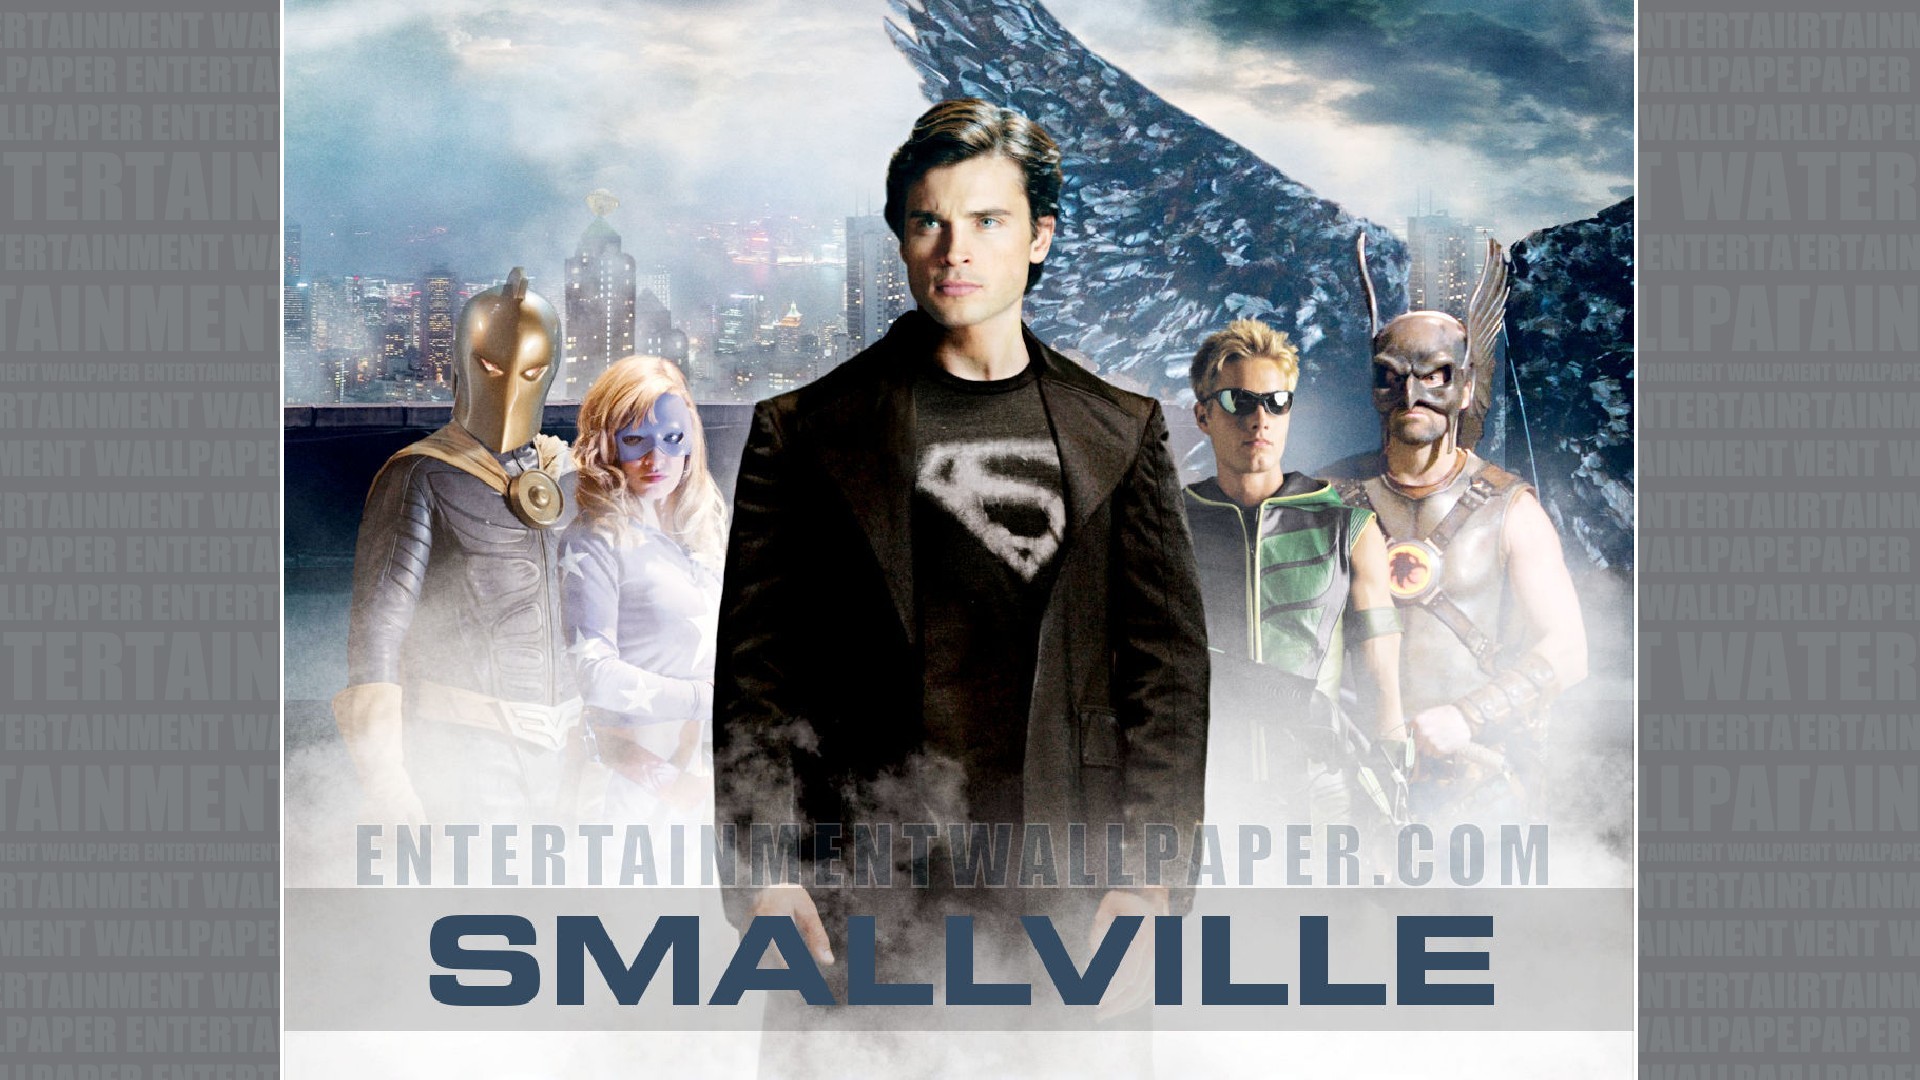 1920x1080 Smallville Wallpaper - Original size, download now.